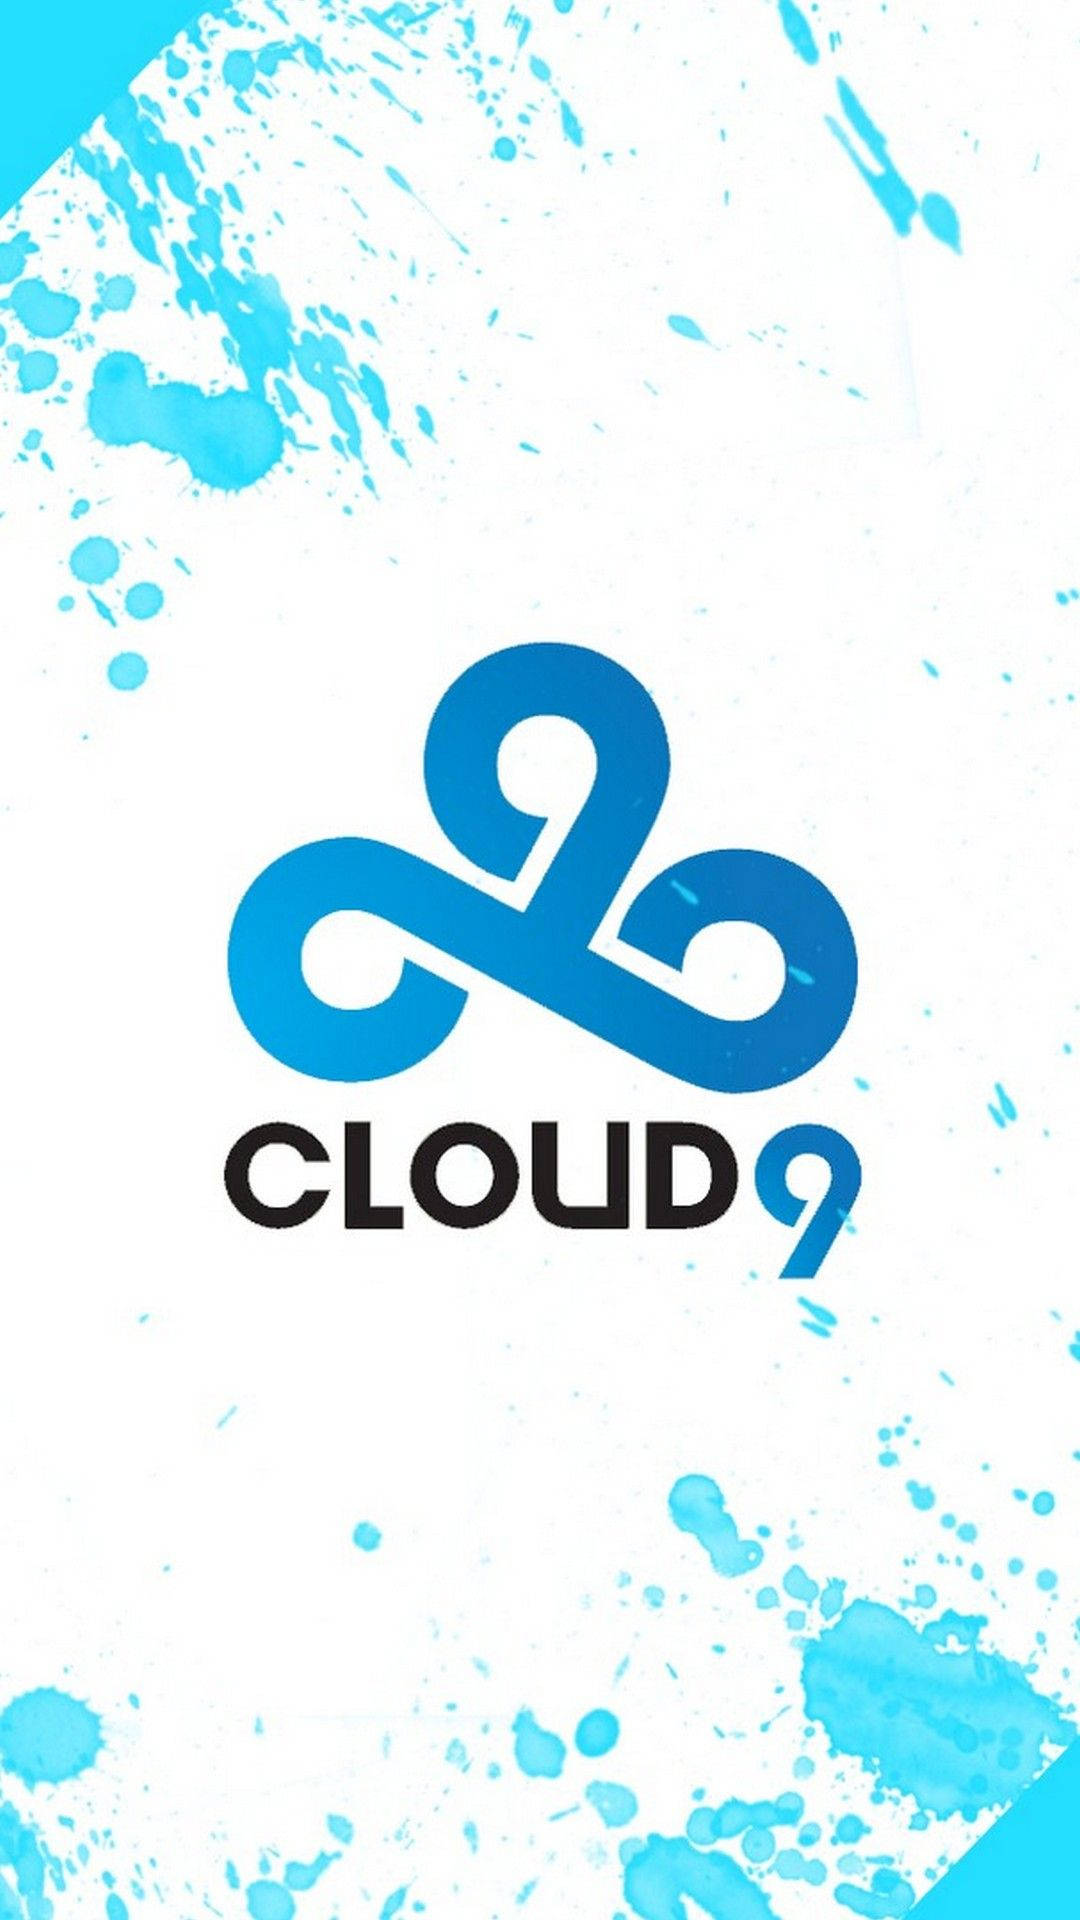 Cloud9 Logo Blue Paint Splatter Background